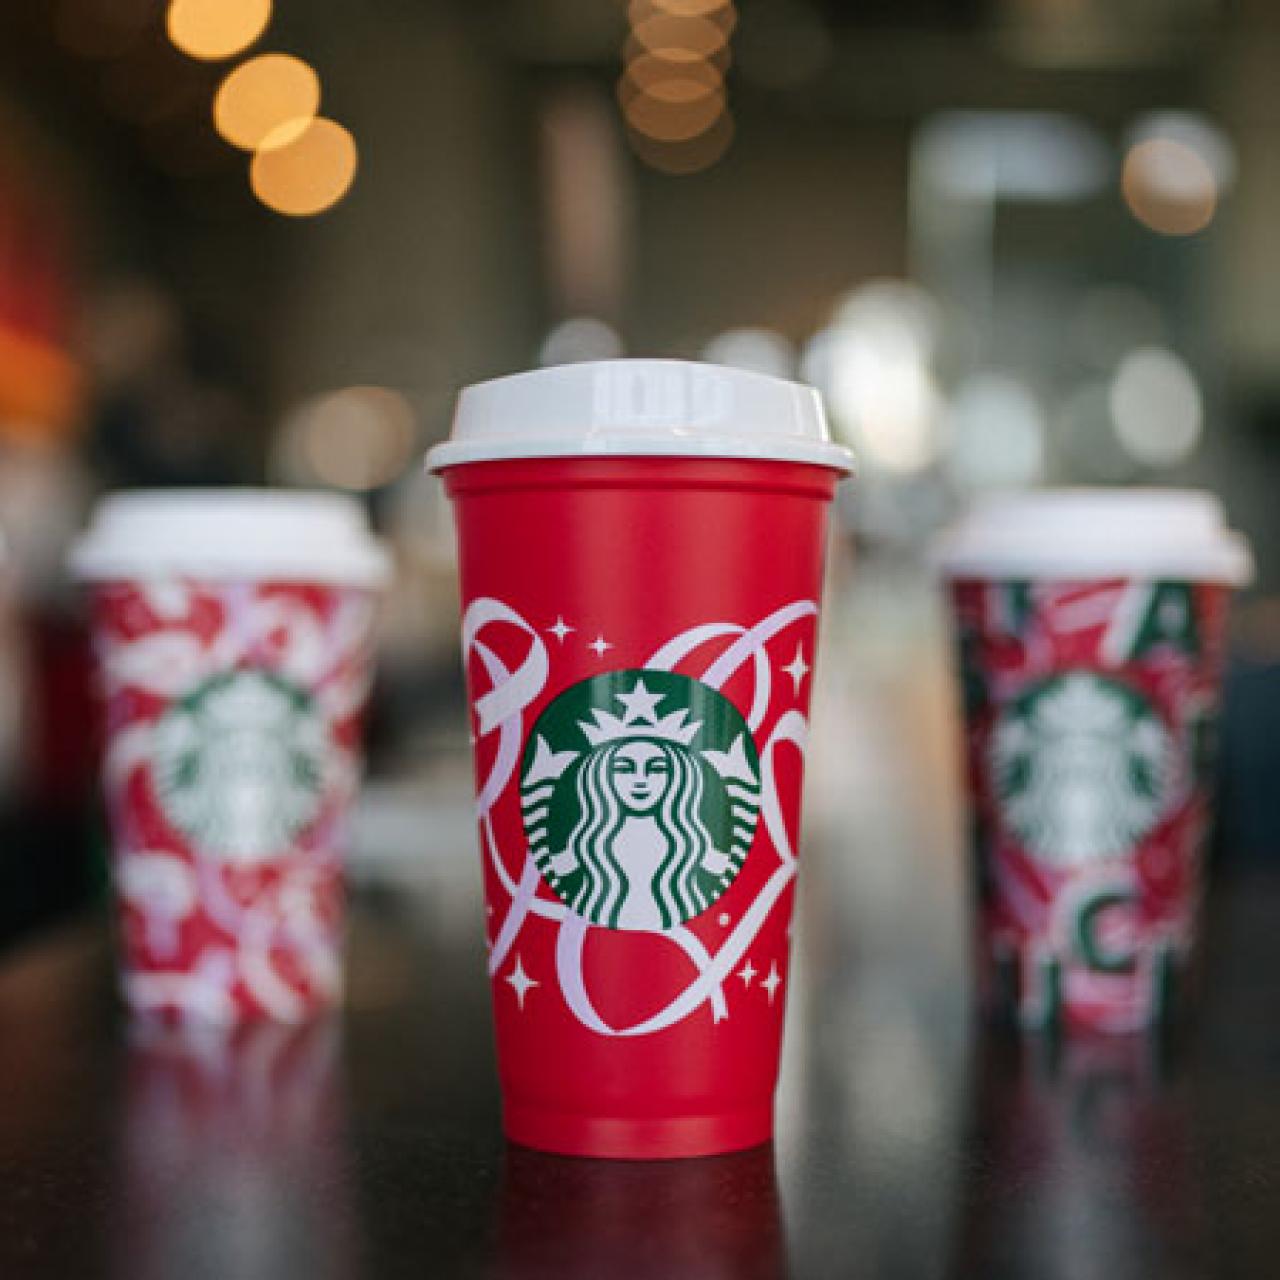 https://food.fnr.sndimg.com/content/dam/images/food/fullset/2021/11/16/Starbucks-Holiday-Cups-with-Reusable-Cup_s4x3.jpg.rend.hgtvcom.1280.1280.suffix/1637101211928.jpeg